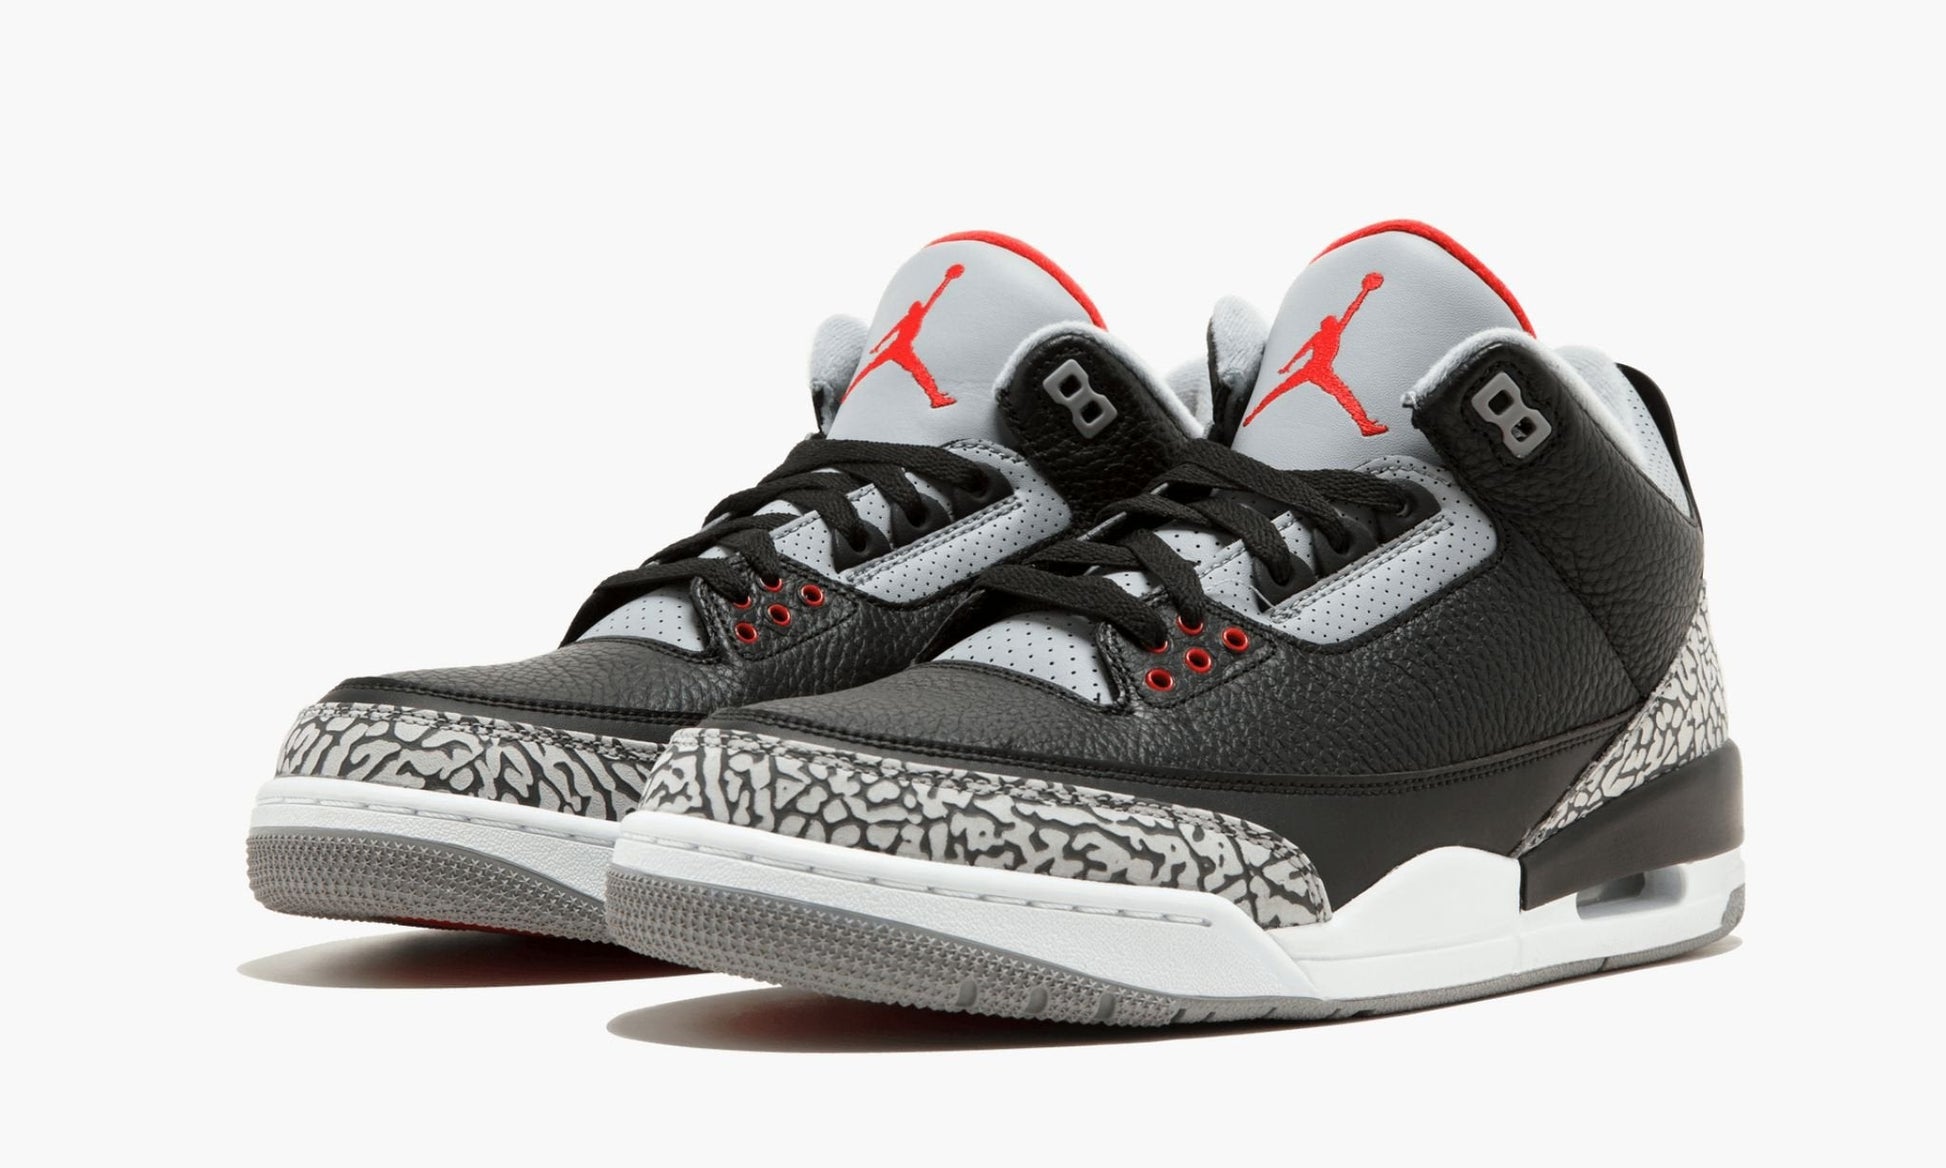 Air Jordan 3 Retro OG "Black/Cement"